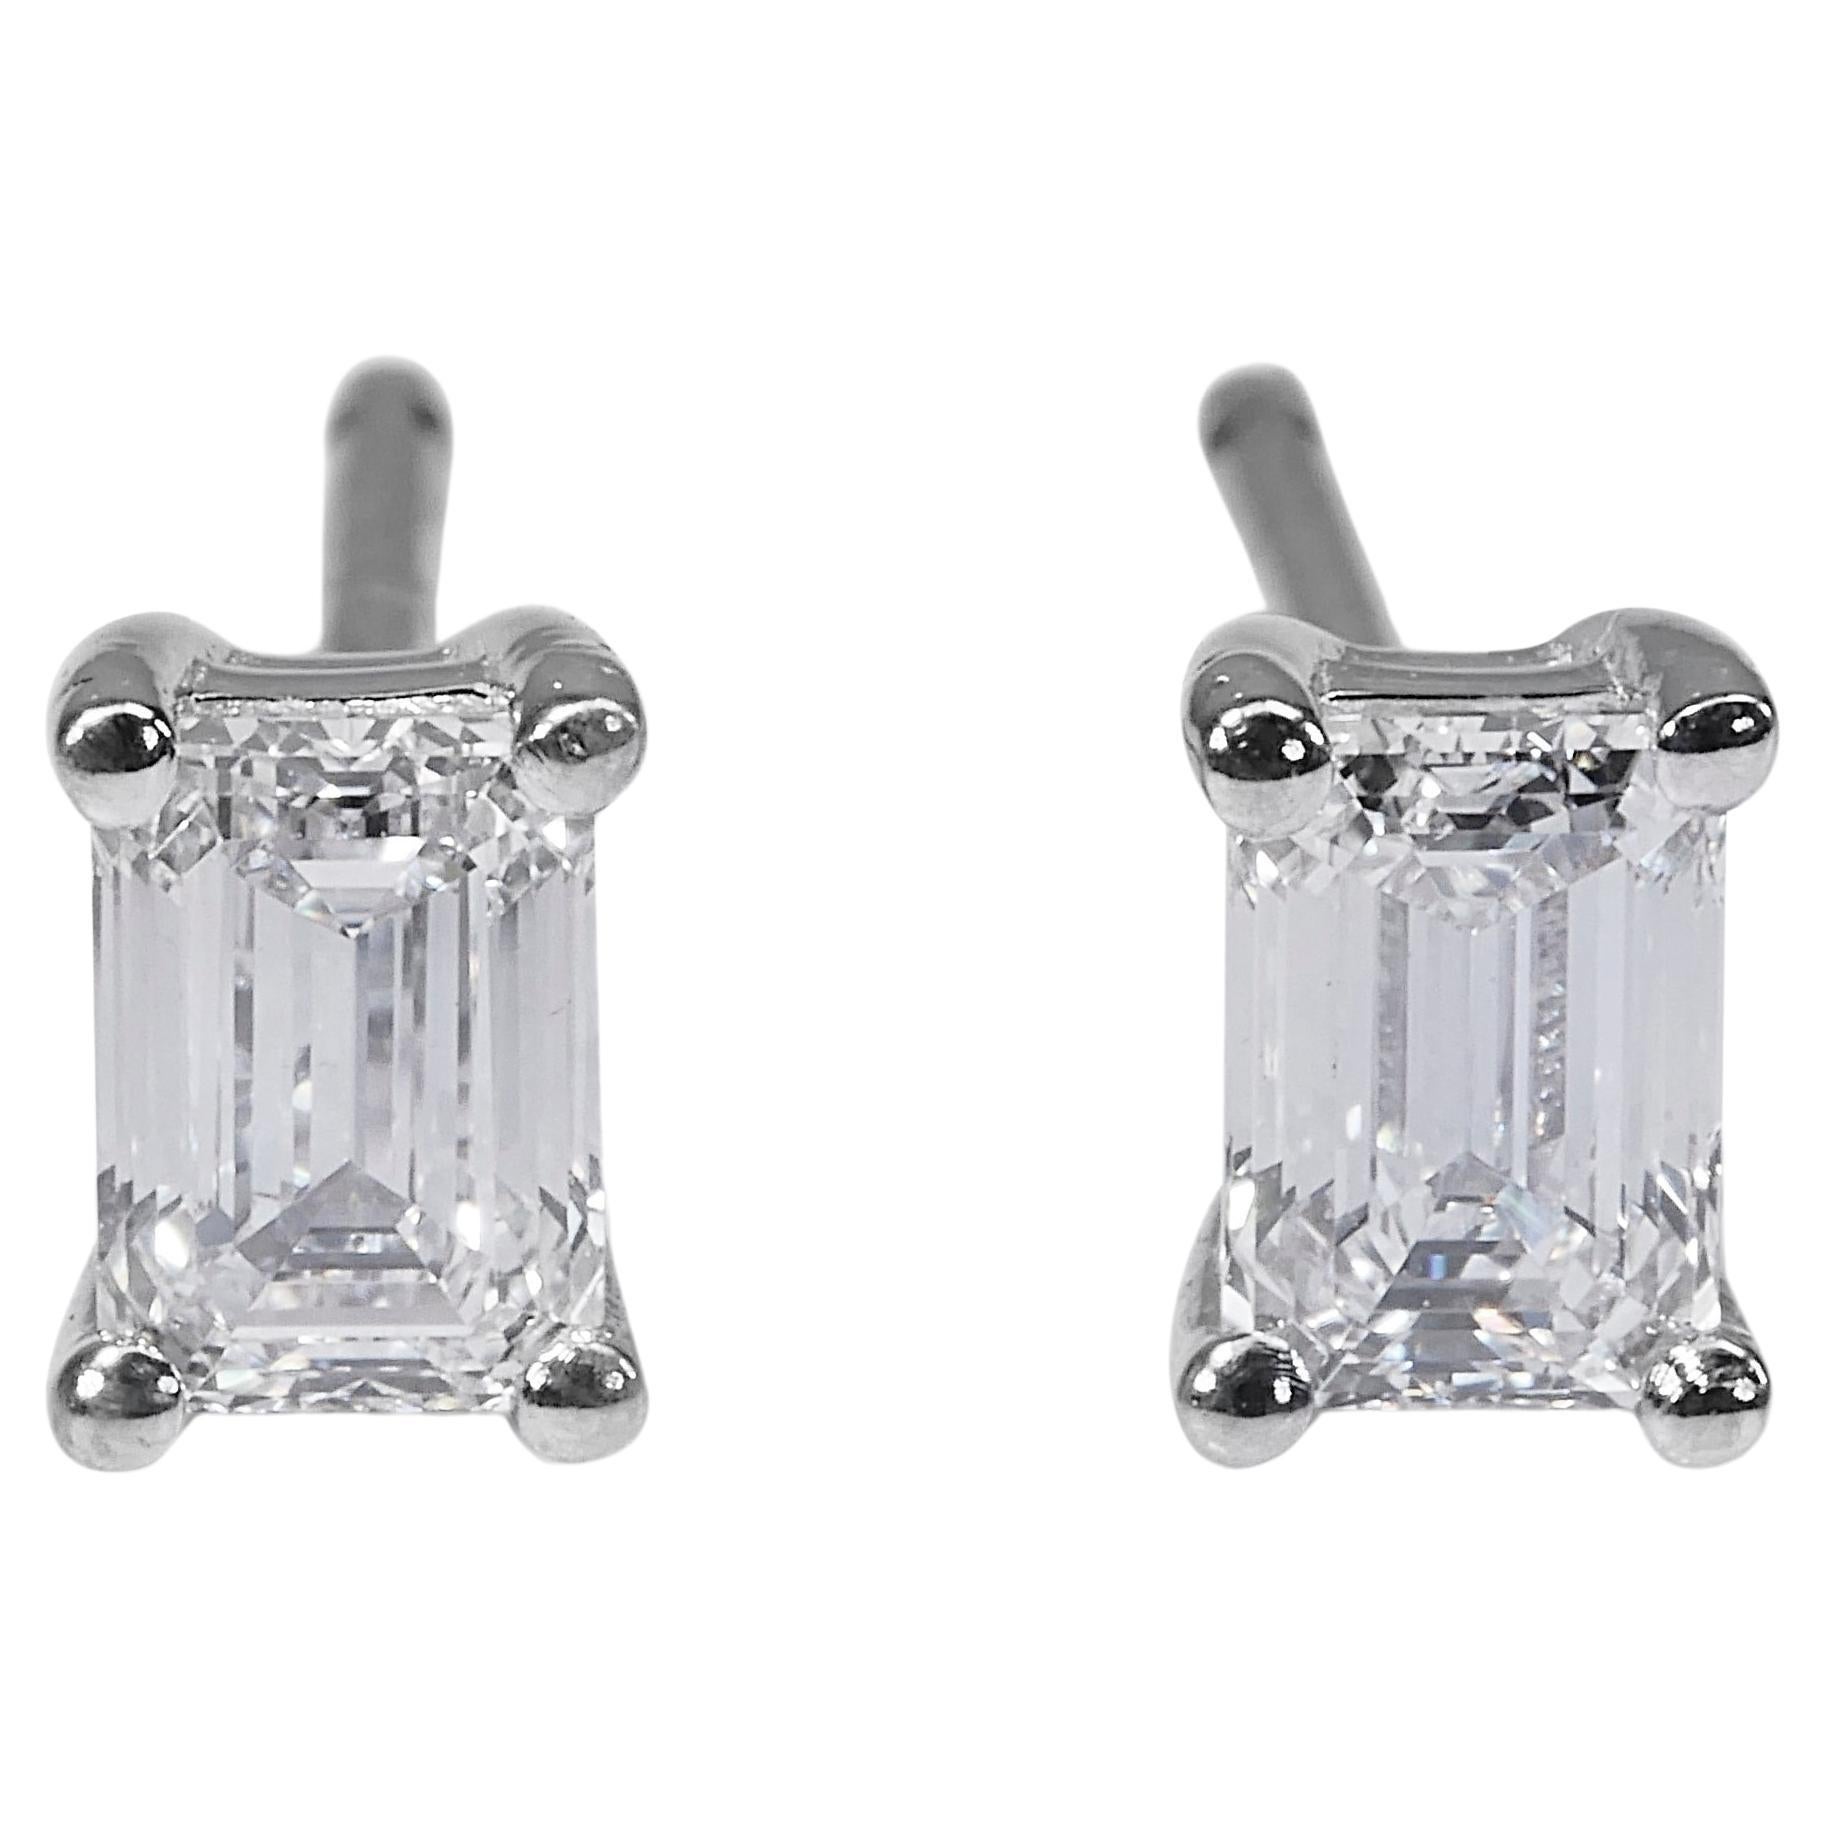 Timeless 2.02ct Diamond Stud Earrings in 18k White Gold - GIA Certified